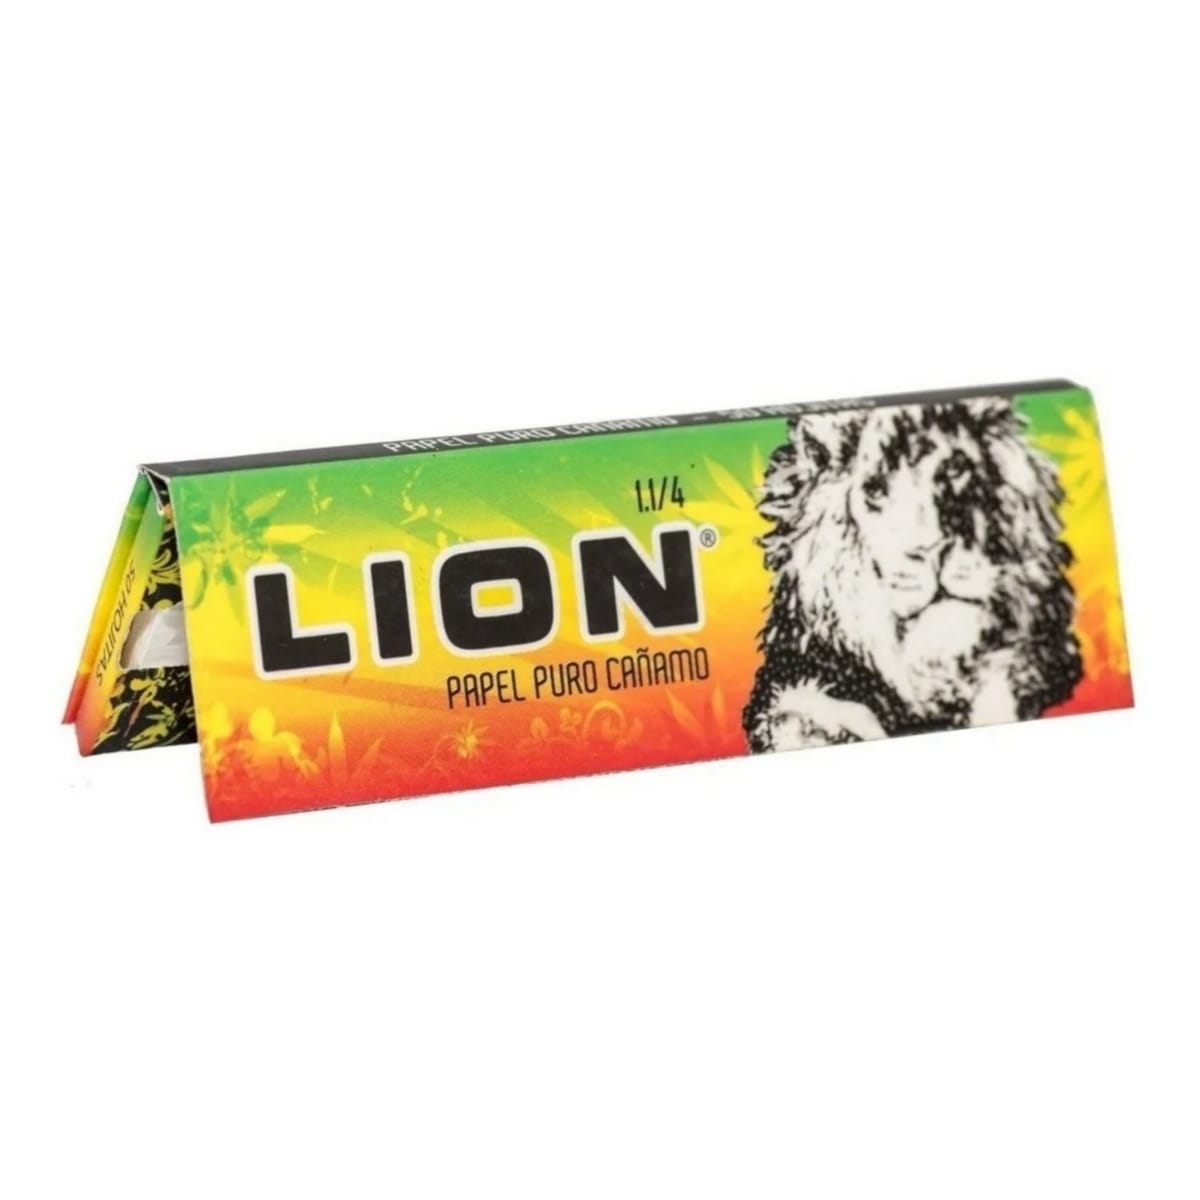 Papel p/Armar Lion Jamaica Ca?amo Regular 1 1/4 x 50u. Lion Rolling Circus